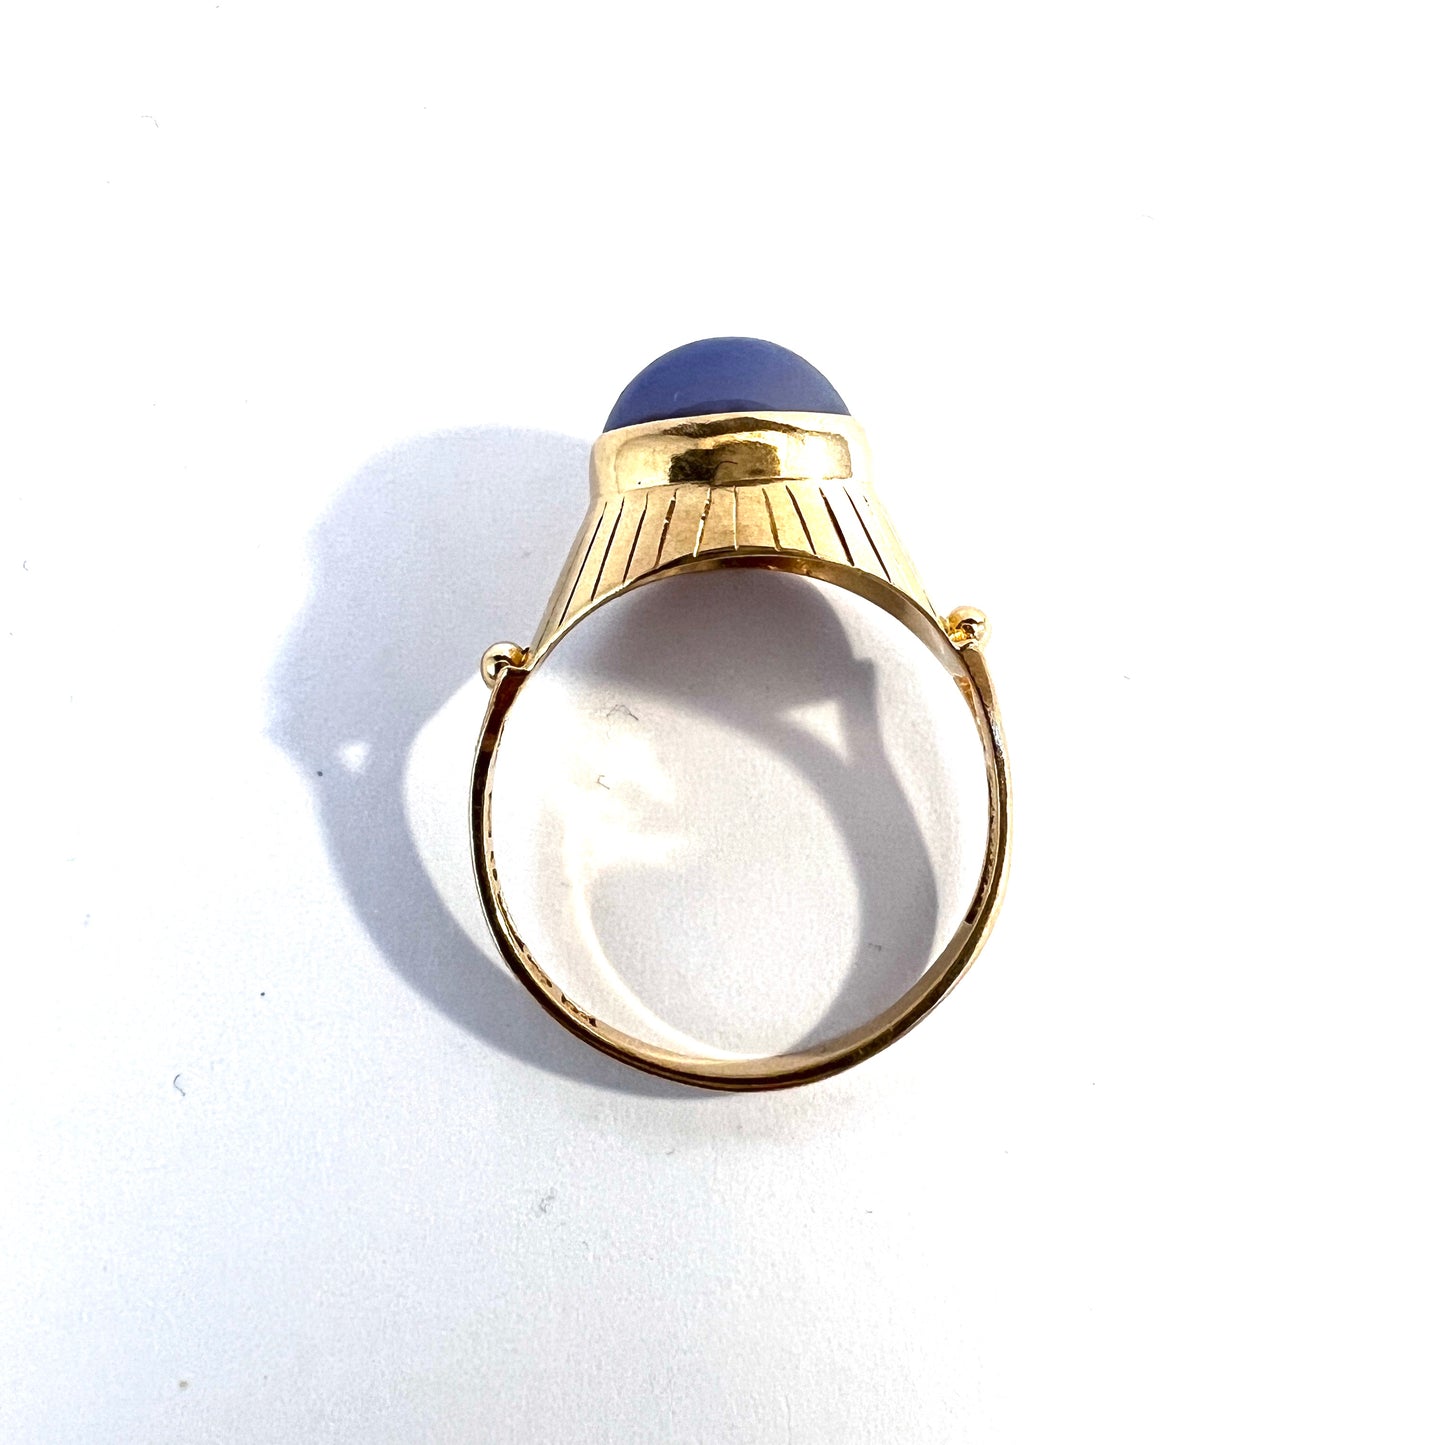 Atelje Stigbert Sweden 1955. Vintage Mid-century Modern 18k Gold Chalcedony Ring.